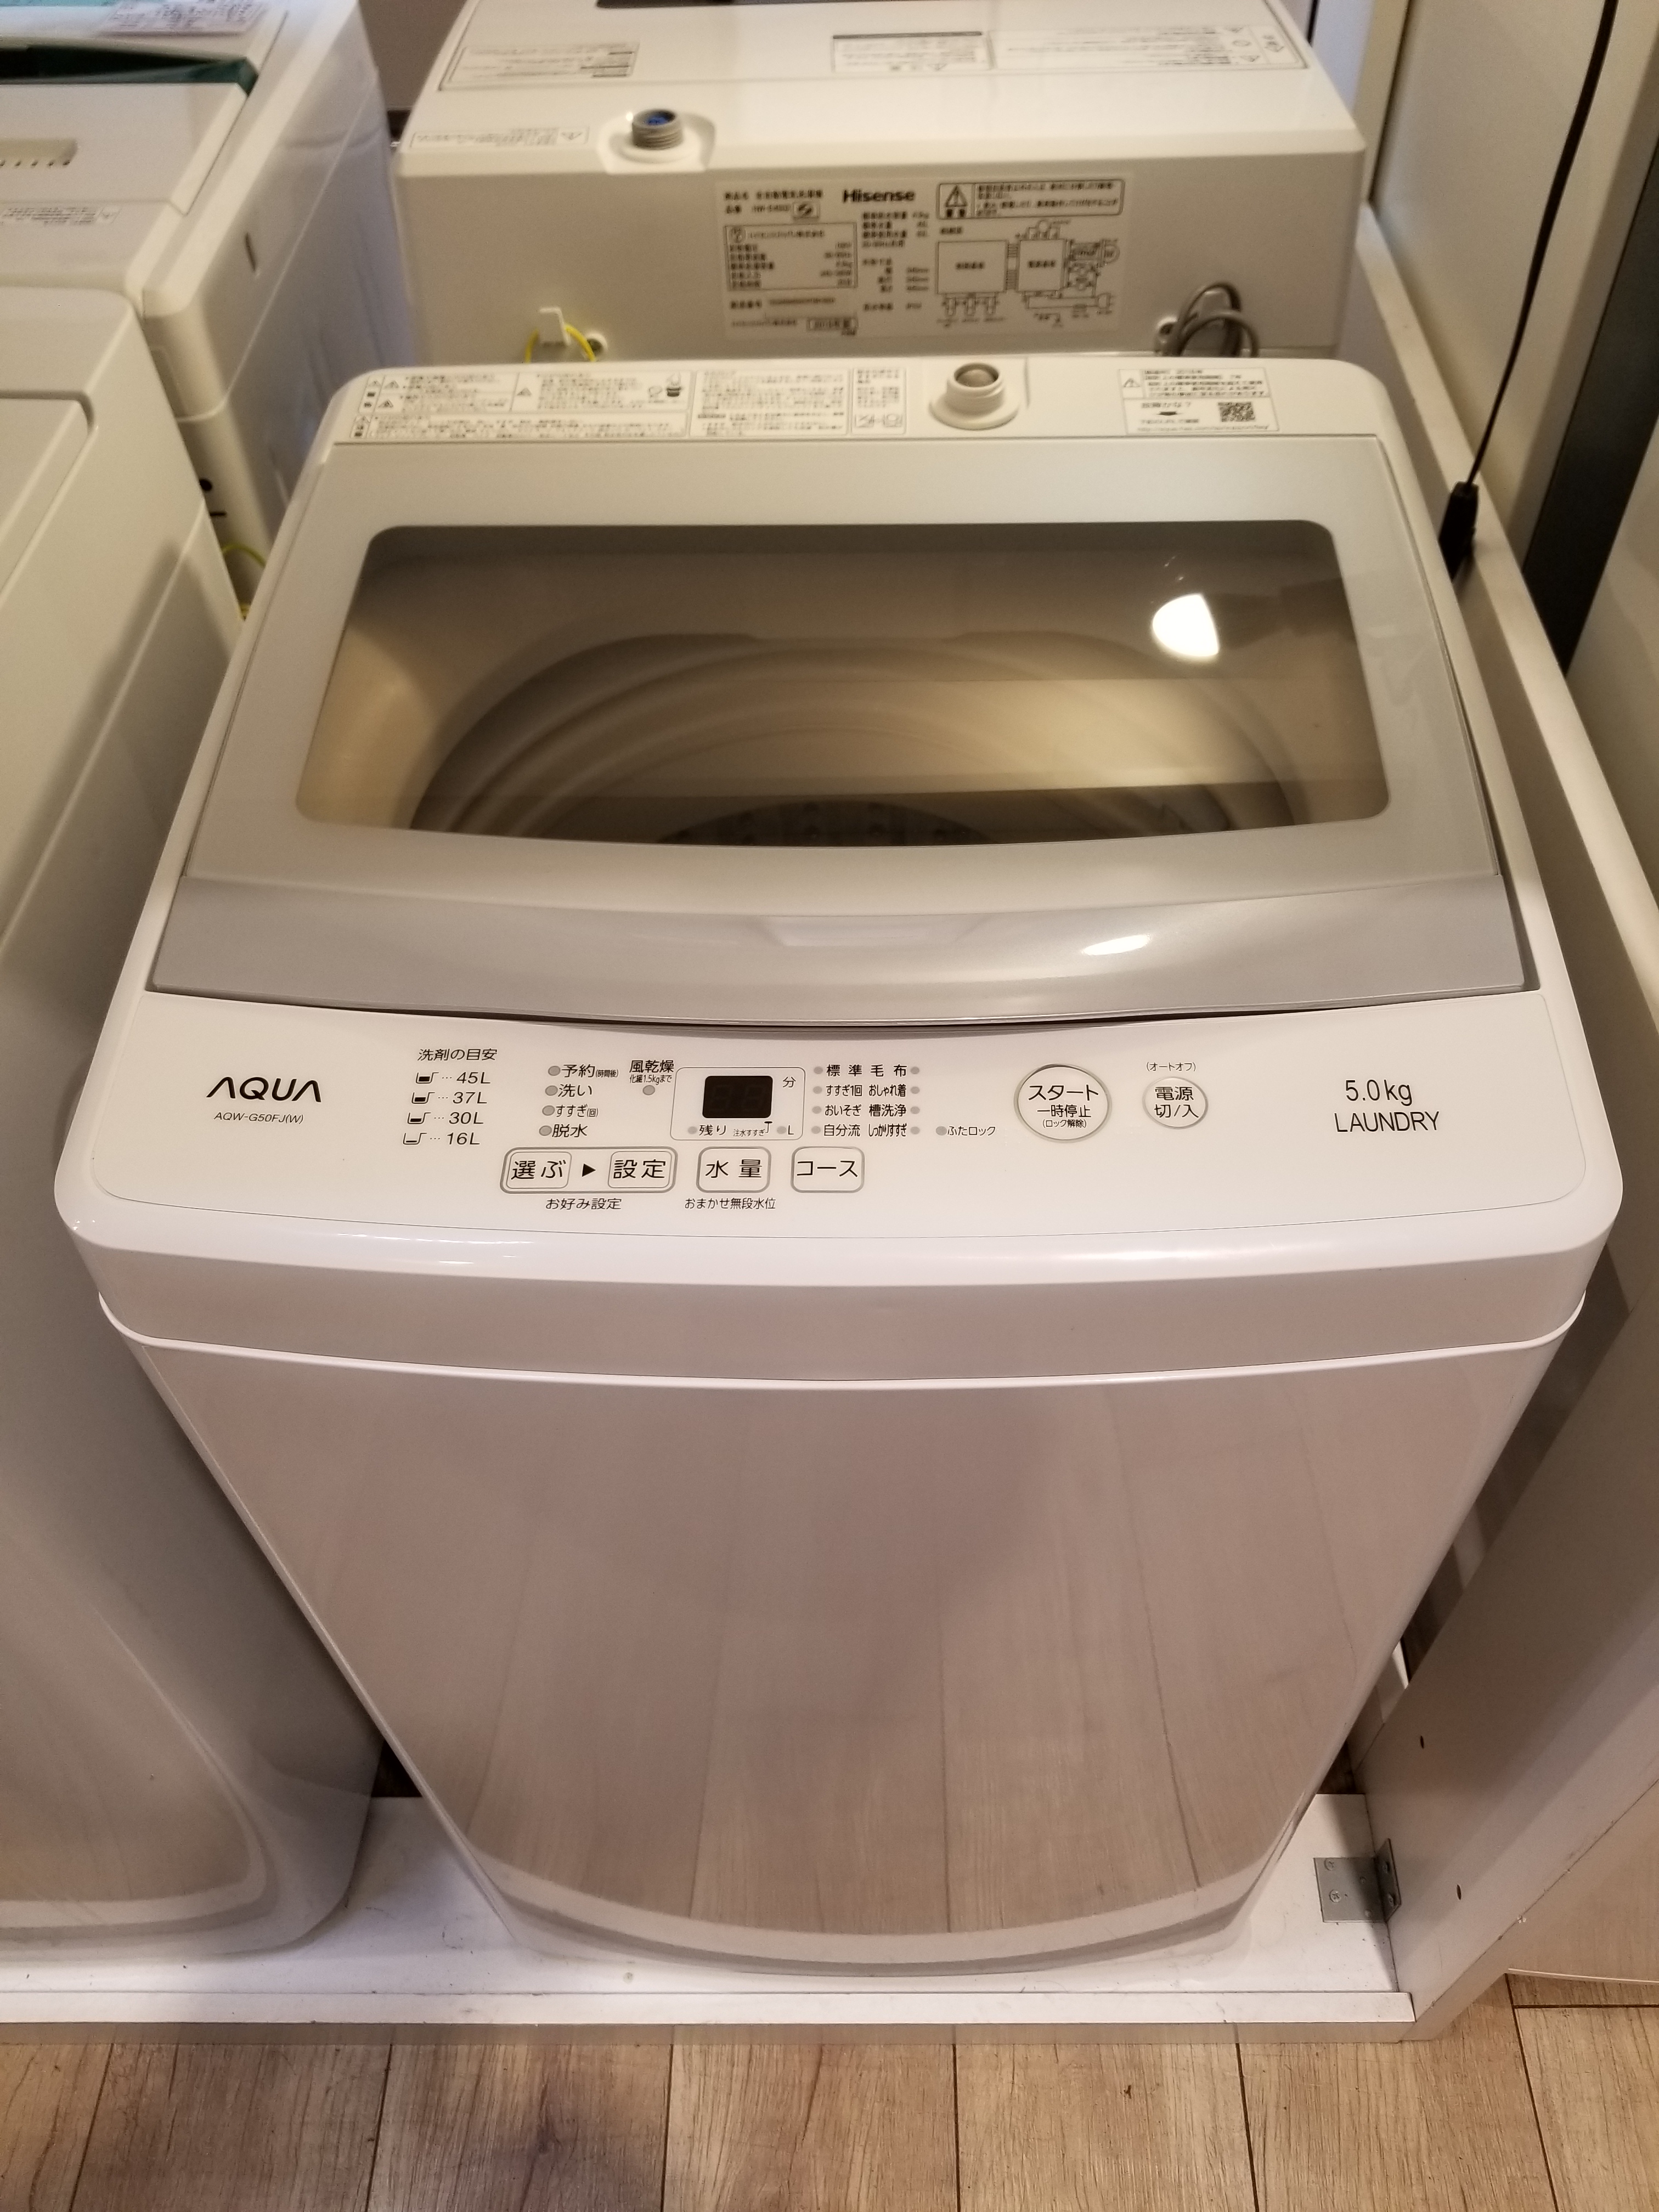 AQUA 5.0K 全自動洗濯機 AQW-G50FJ(W) 買取しました！ | 愛知と岐阜のリサイクルショップ 再良市場